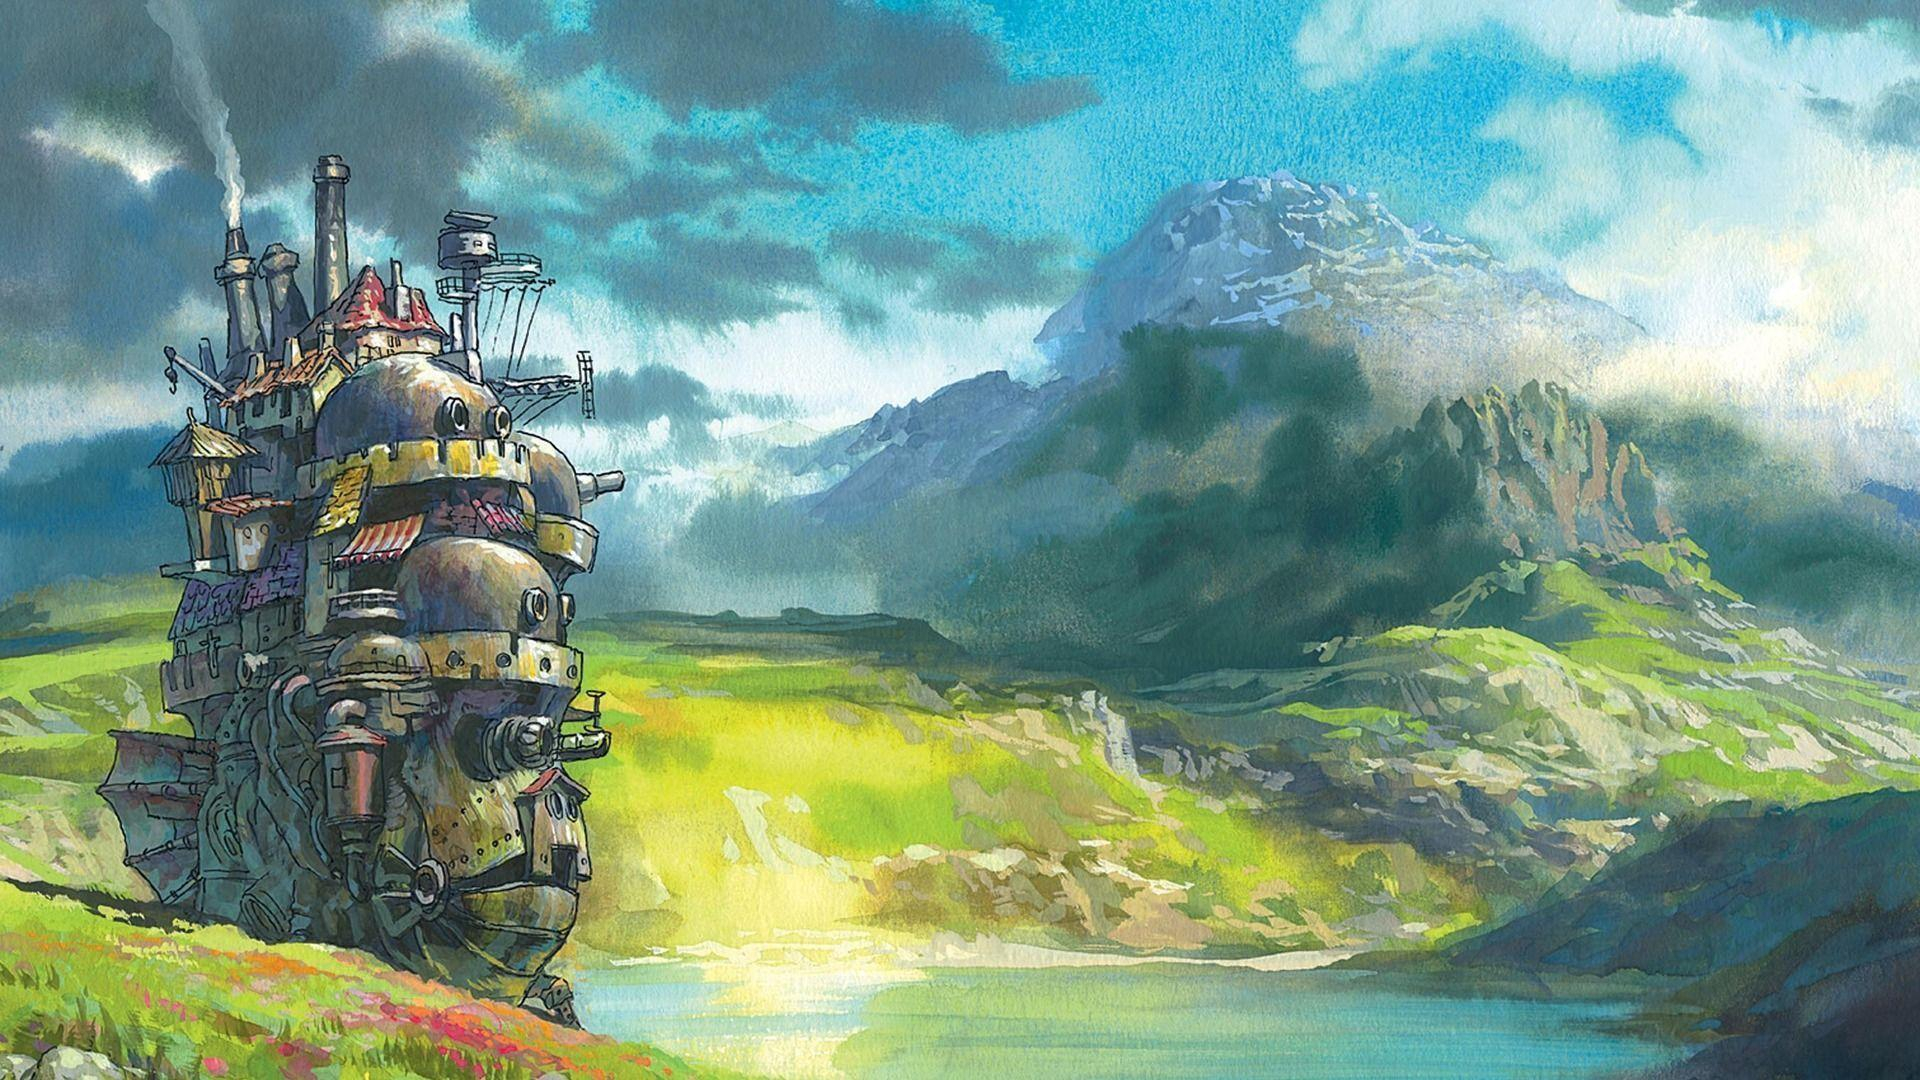 1920x1080 Studio Ghibli Desktop Wallpapers Top Free Studio Ghibli Desktop Backgrounds